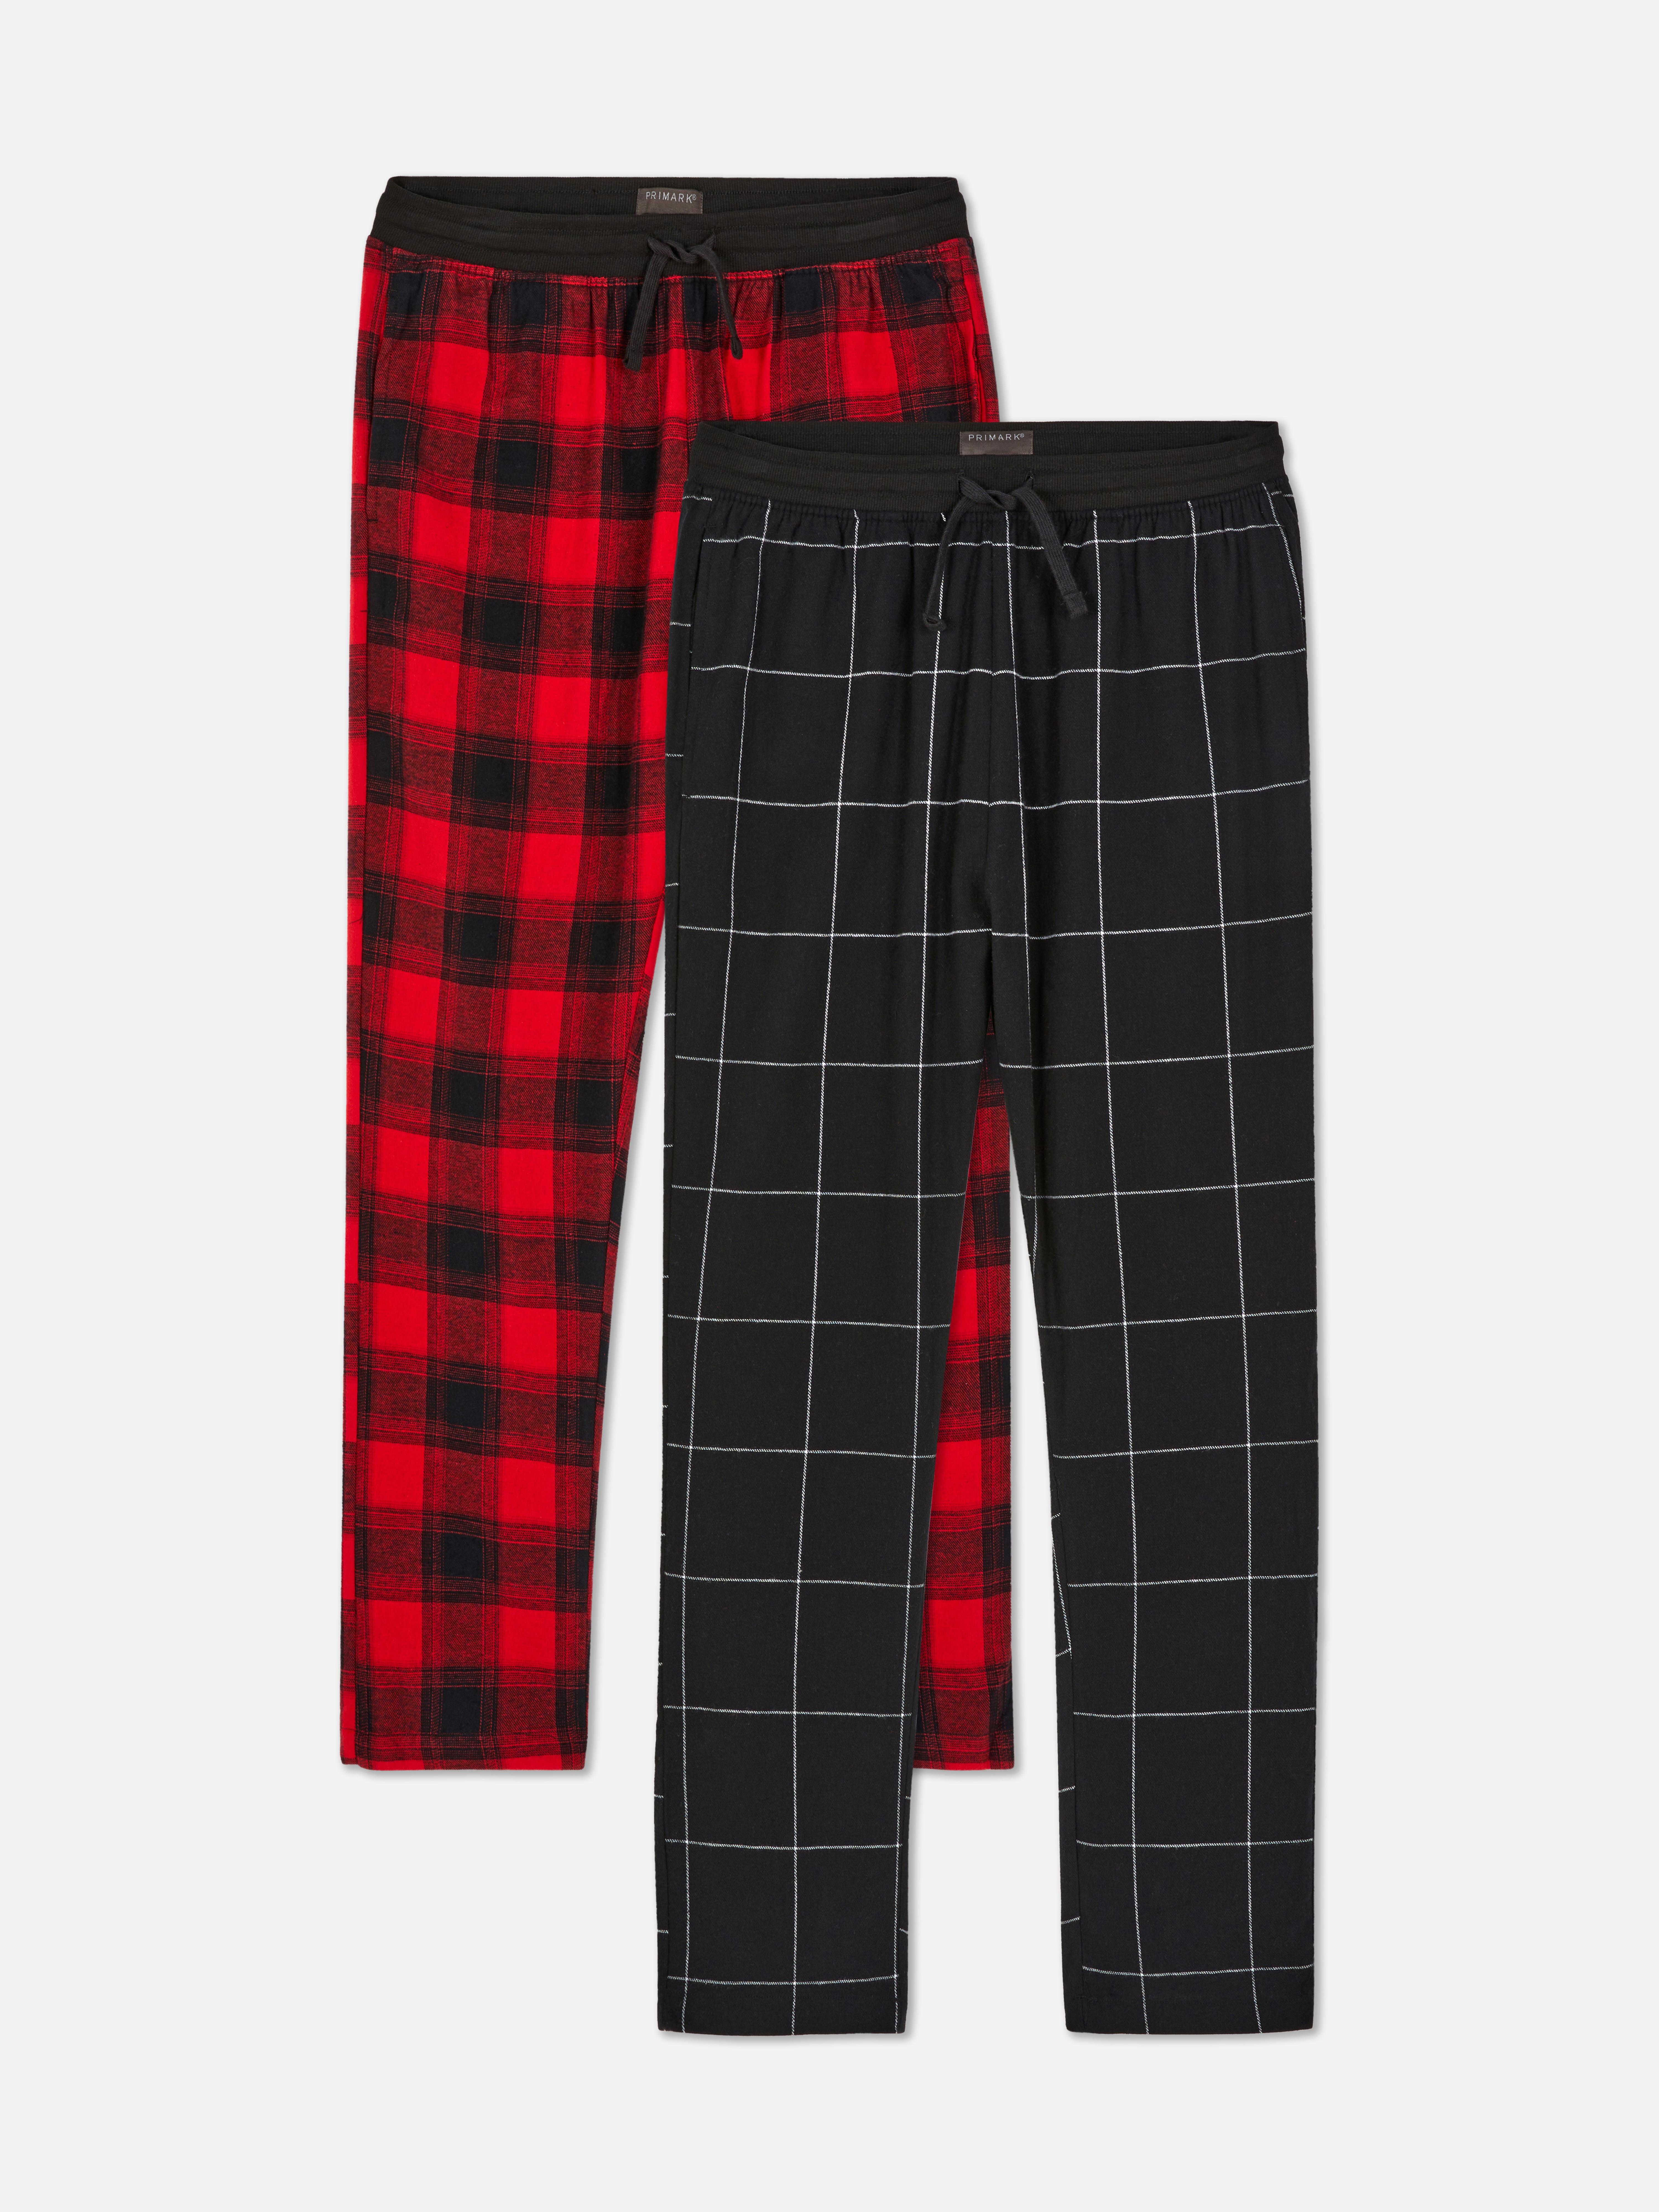 Men's Pyjamas & Nightwear, Pyjama Sets, Bottoms & Shorts